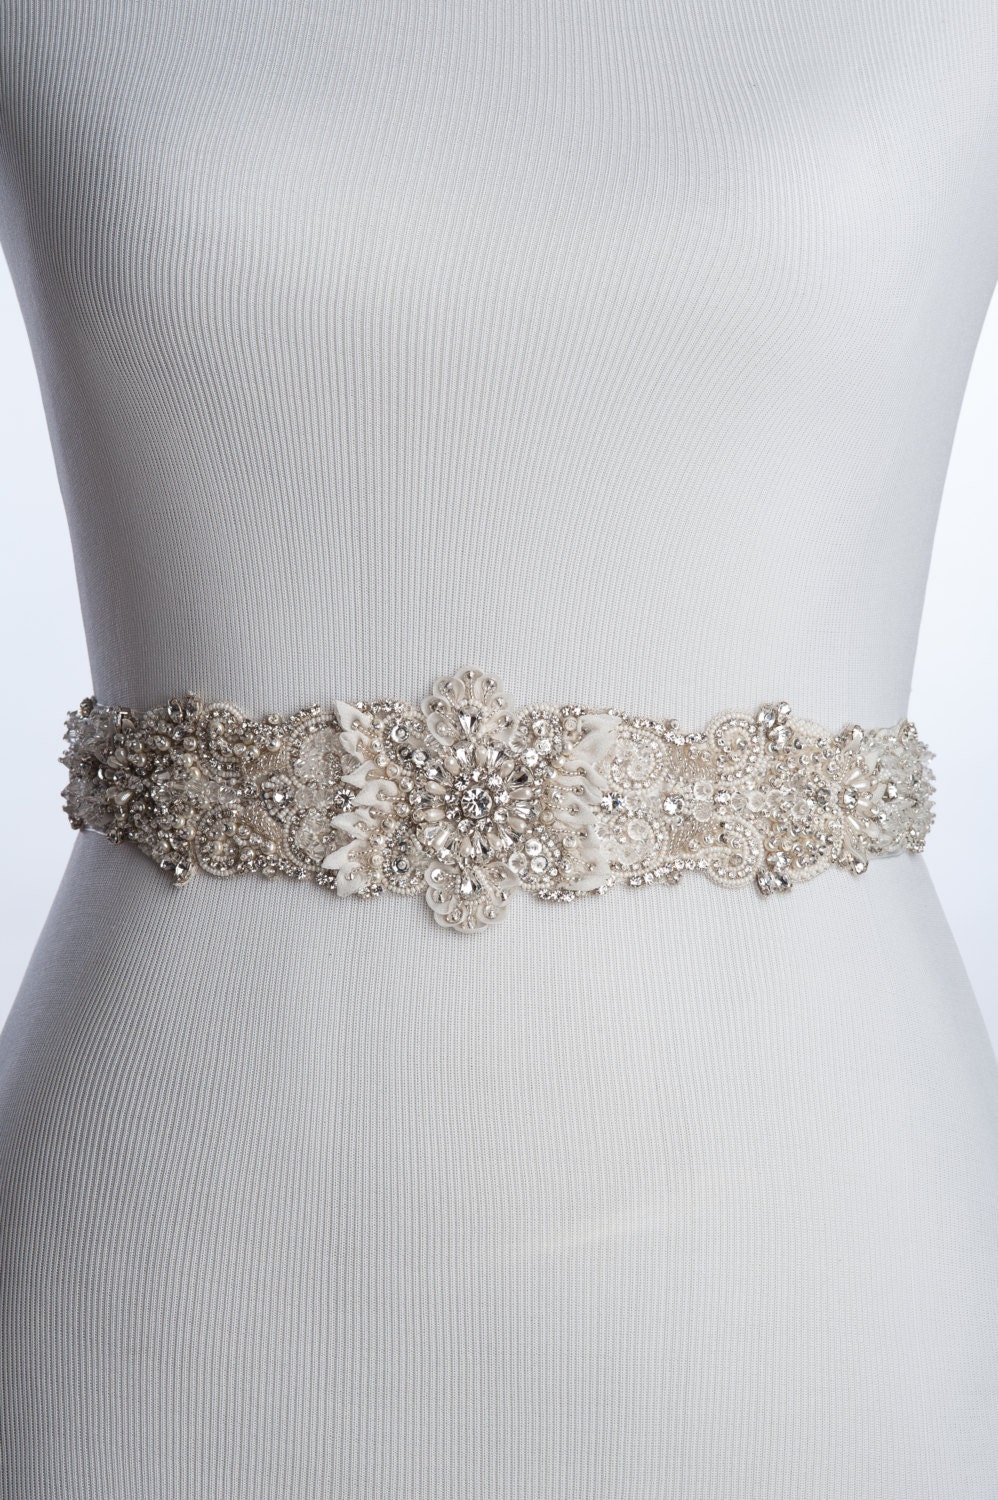 Beautiful wedding sash wedding dress sash beaded Bridal | Etsy